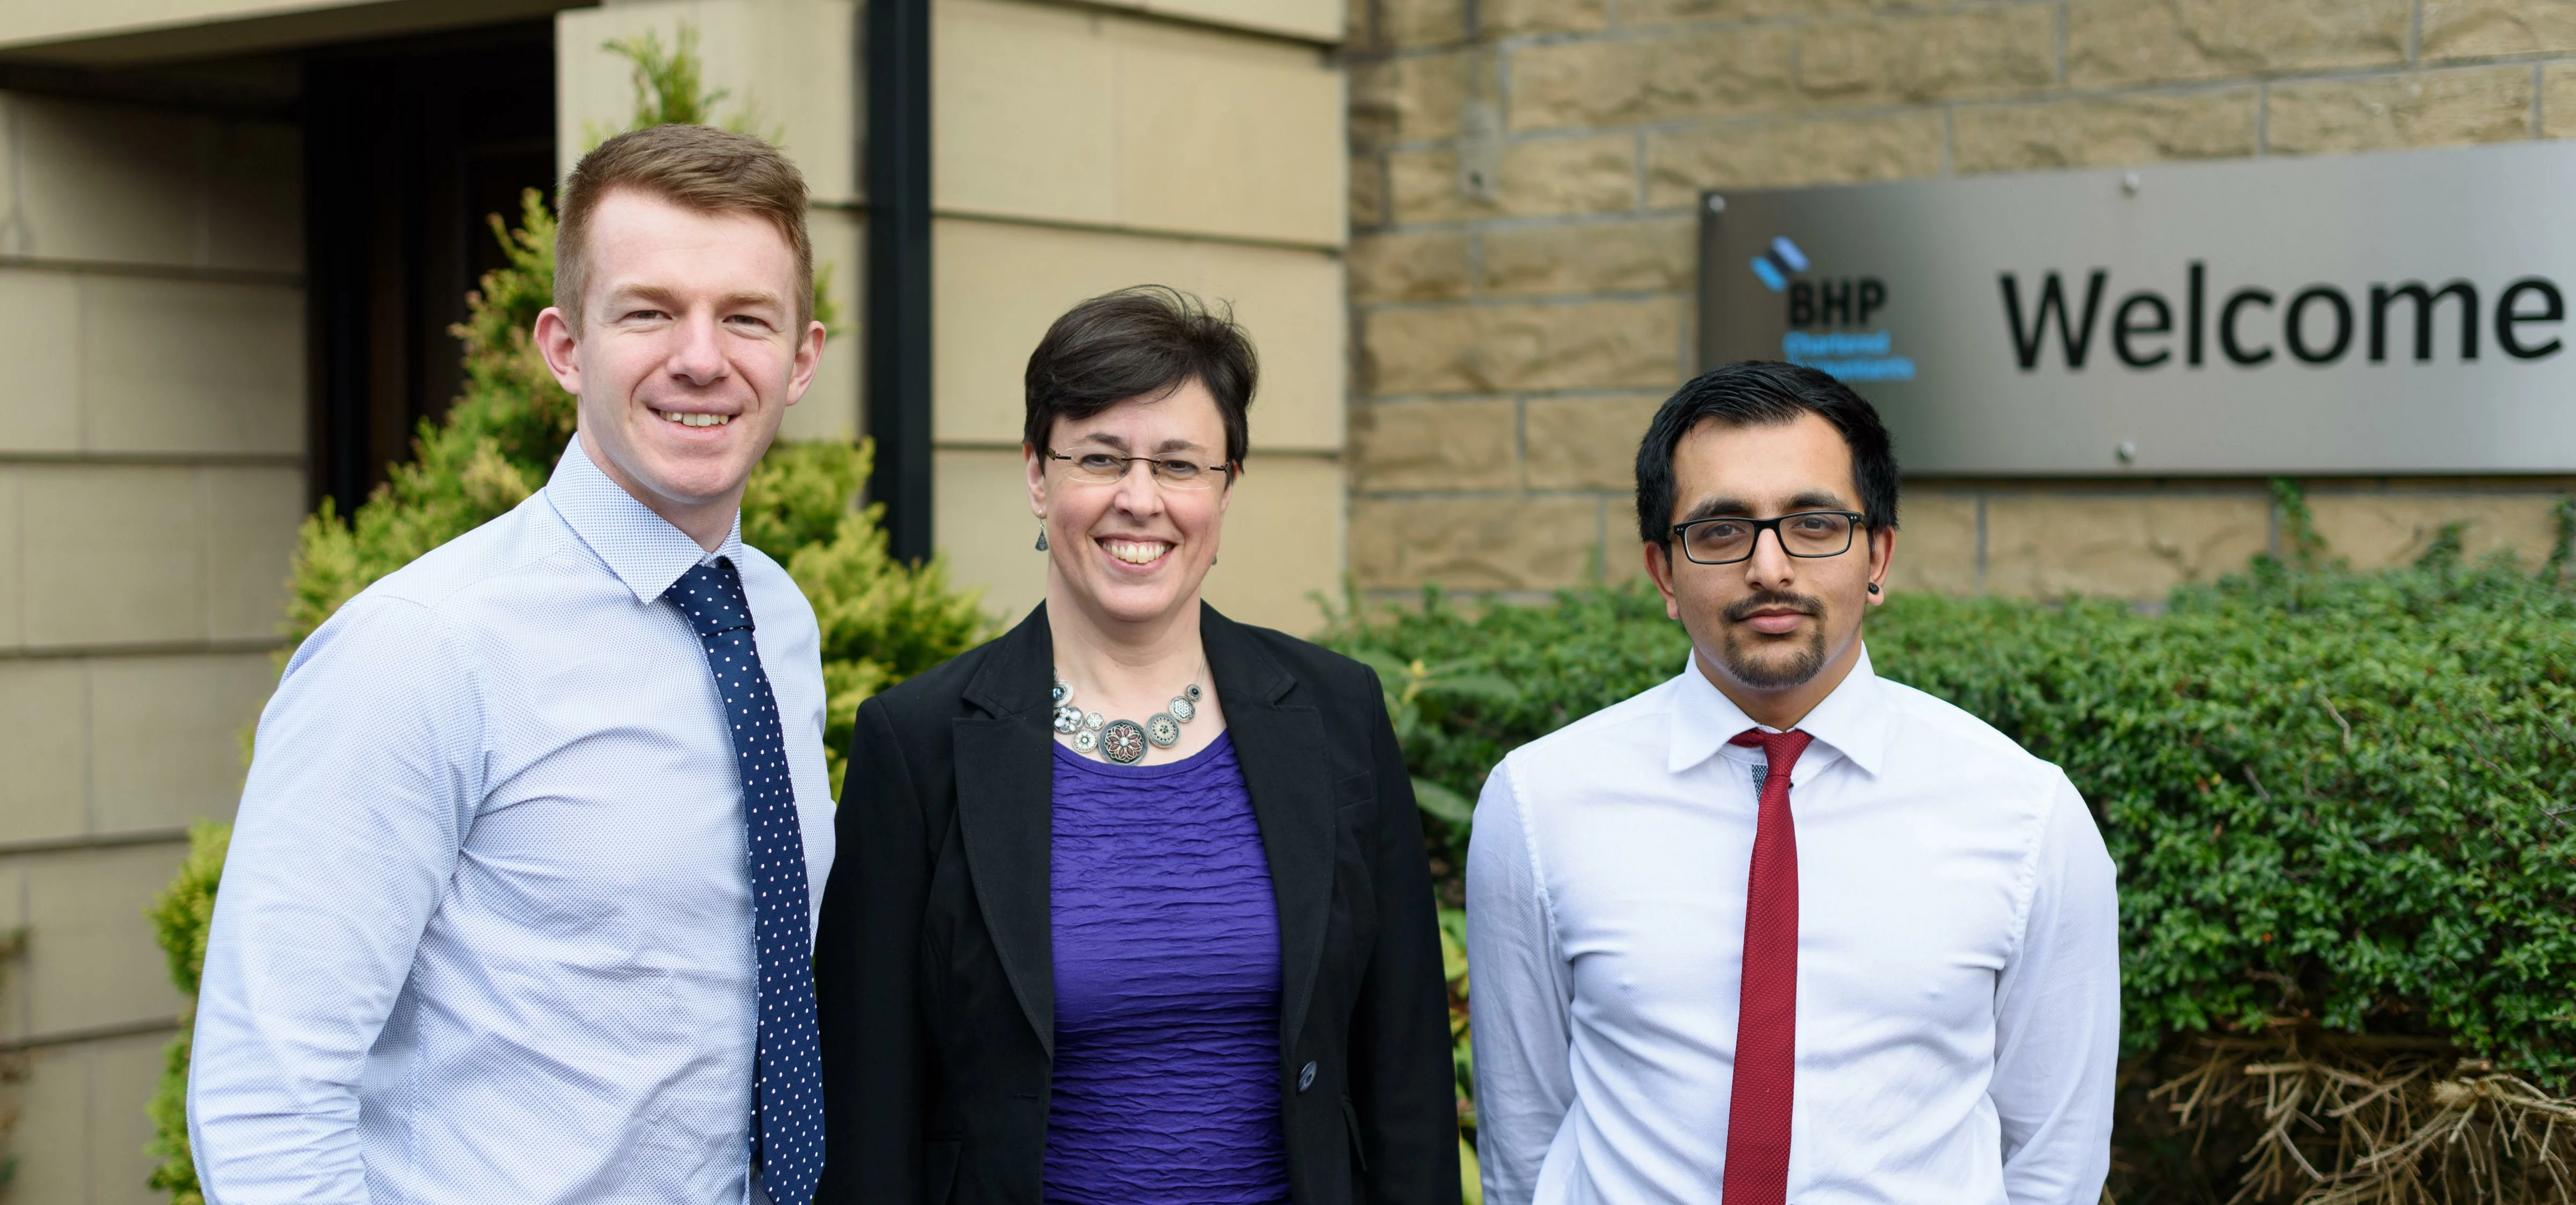  Ben Szoke, Kirsty Swinburn and Adam Zaman from BHP Chartered Accountants. 